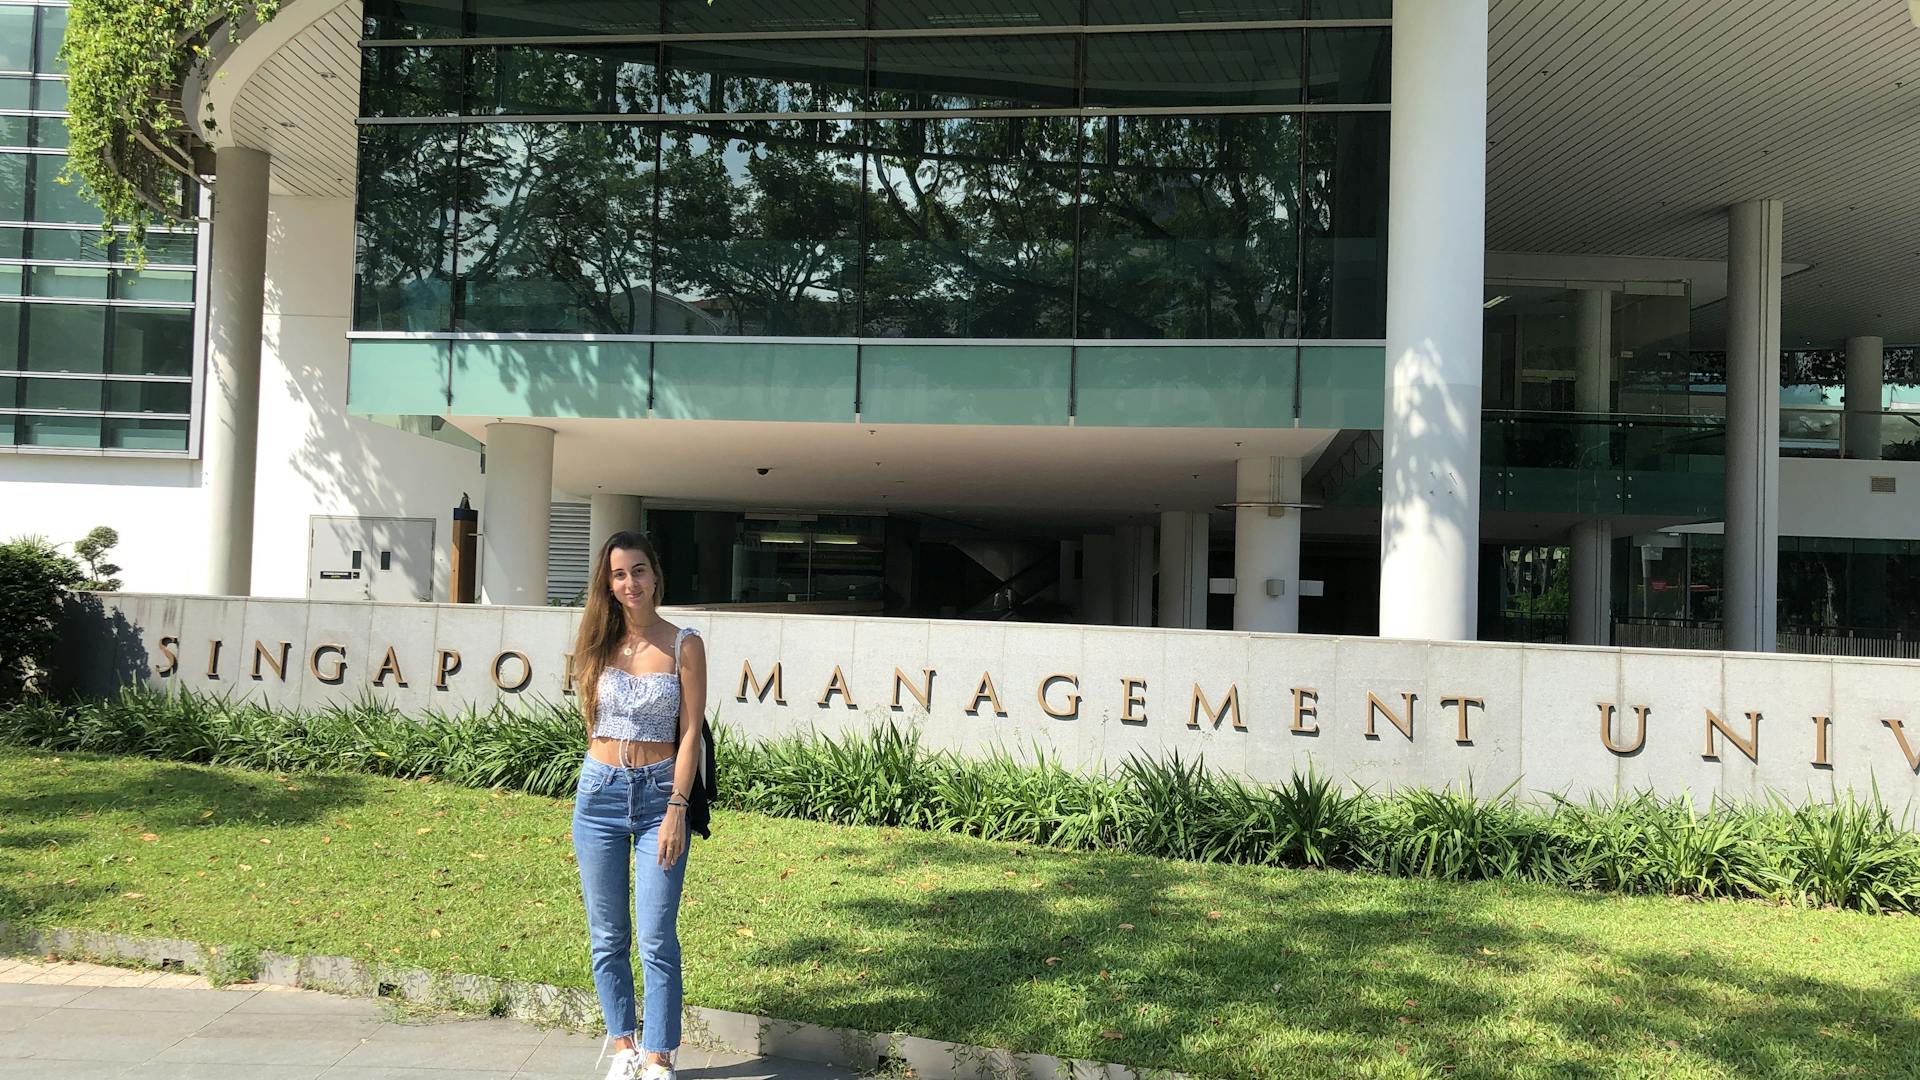 Florentine at Singapore Management University